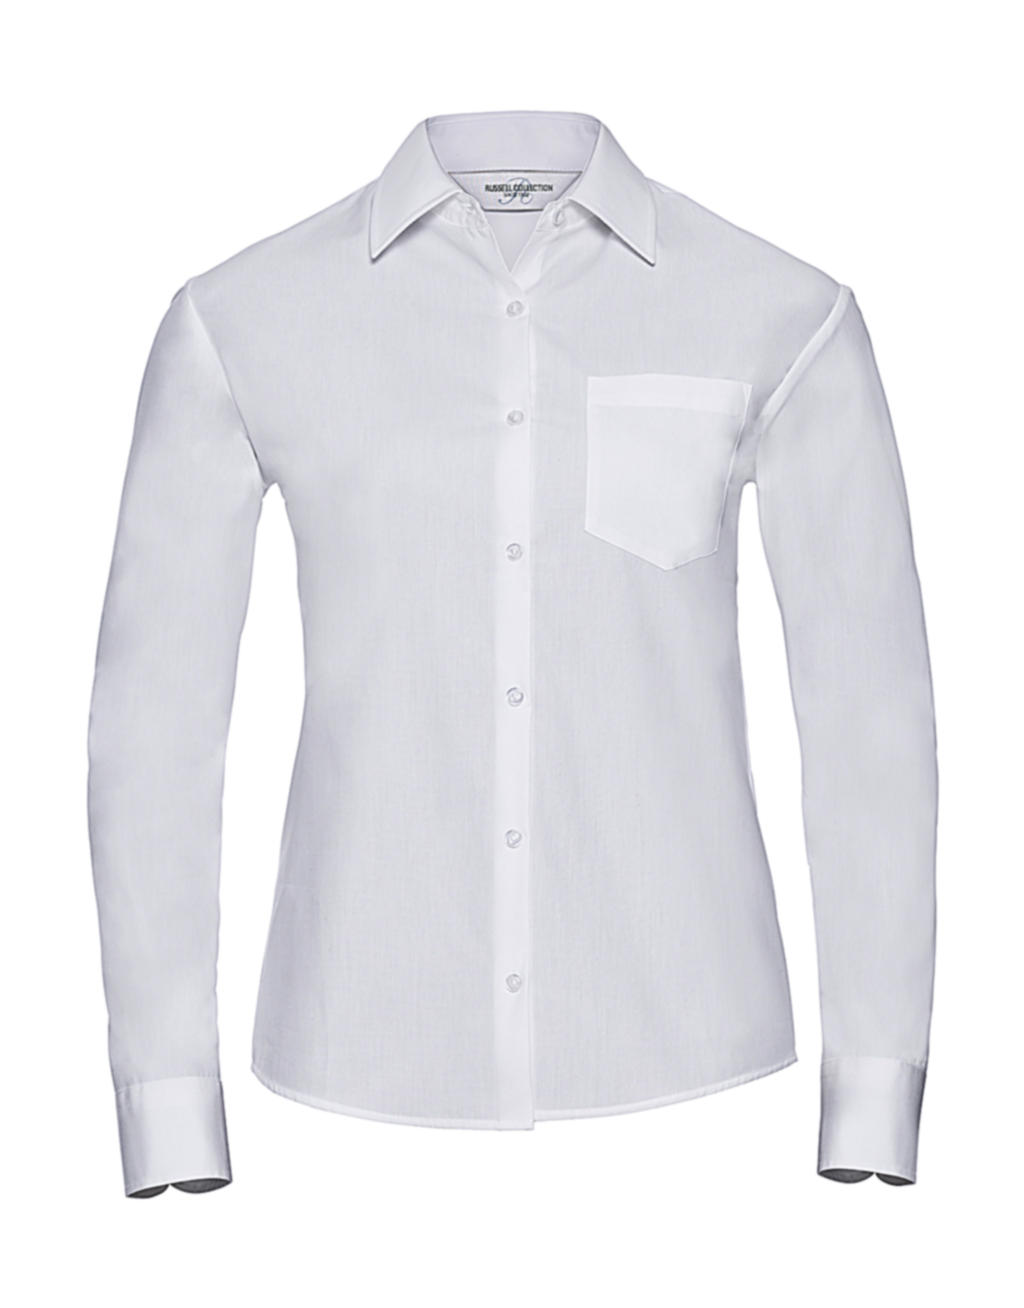  Ladies Cotton Poplin Shirt LS in Farbe White